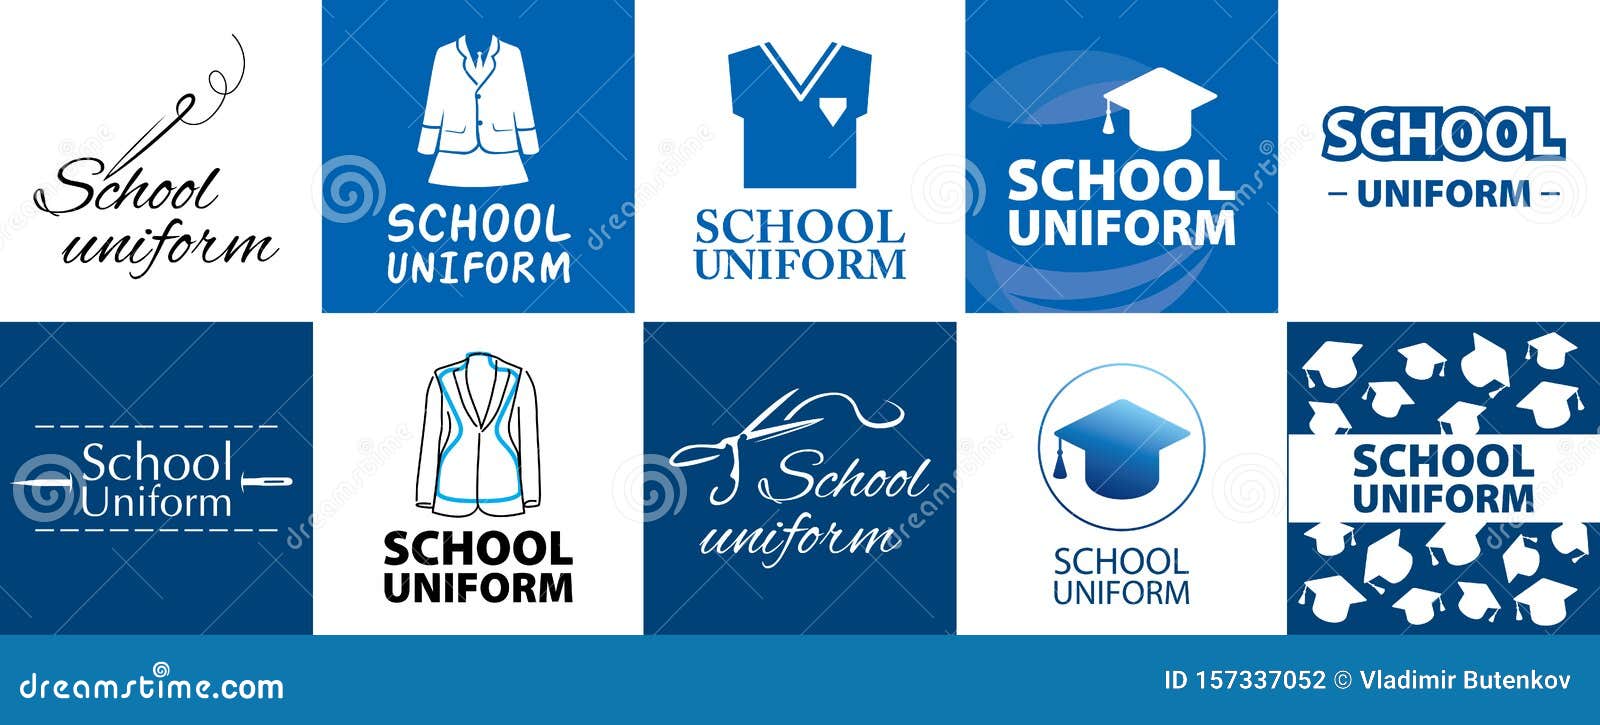 Uniforms and Logos